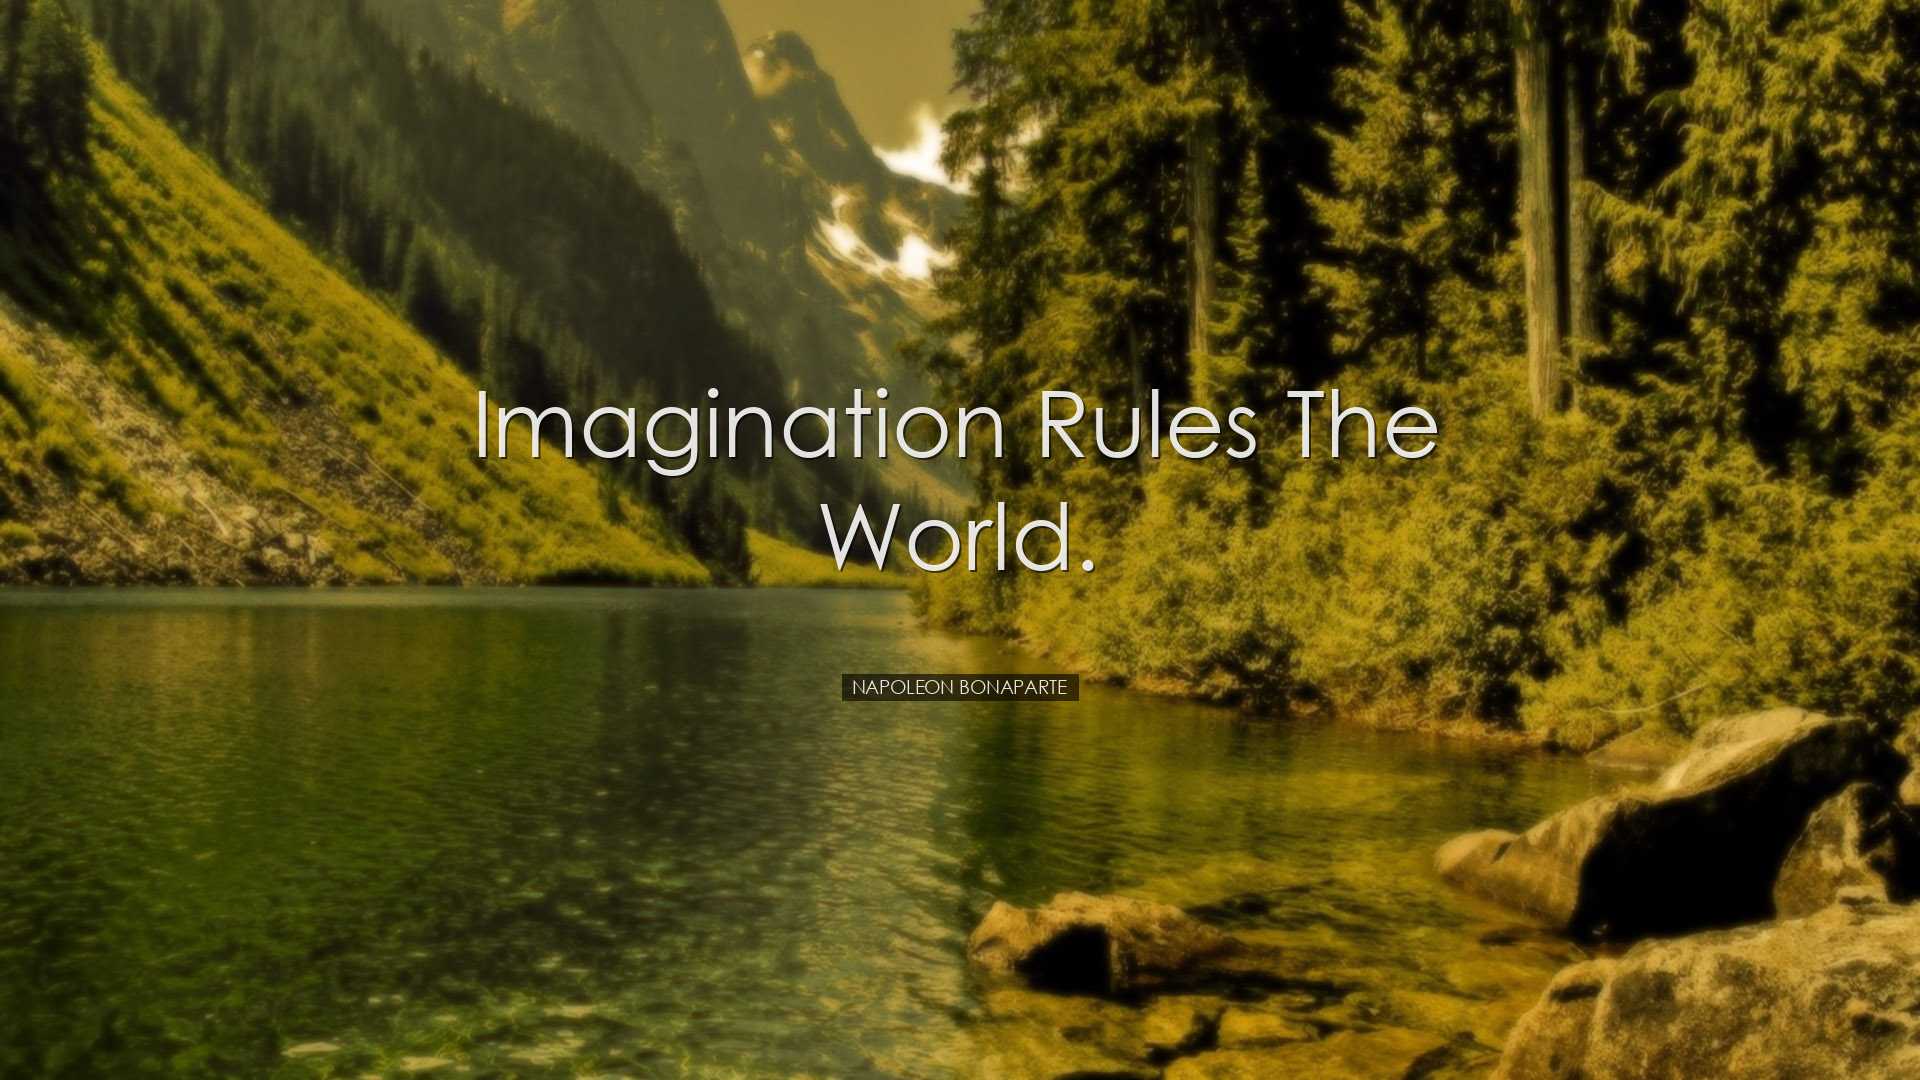 Imagination rules the world. - Napoleon Bonaparte